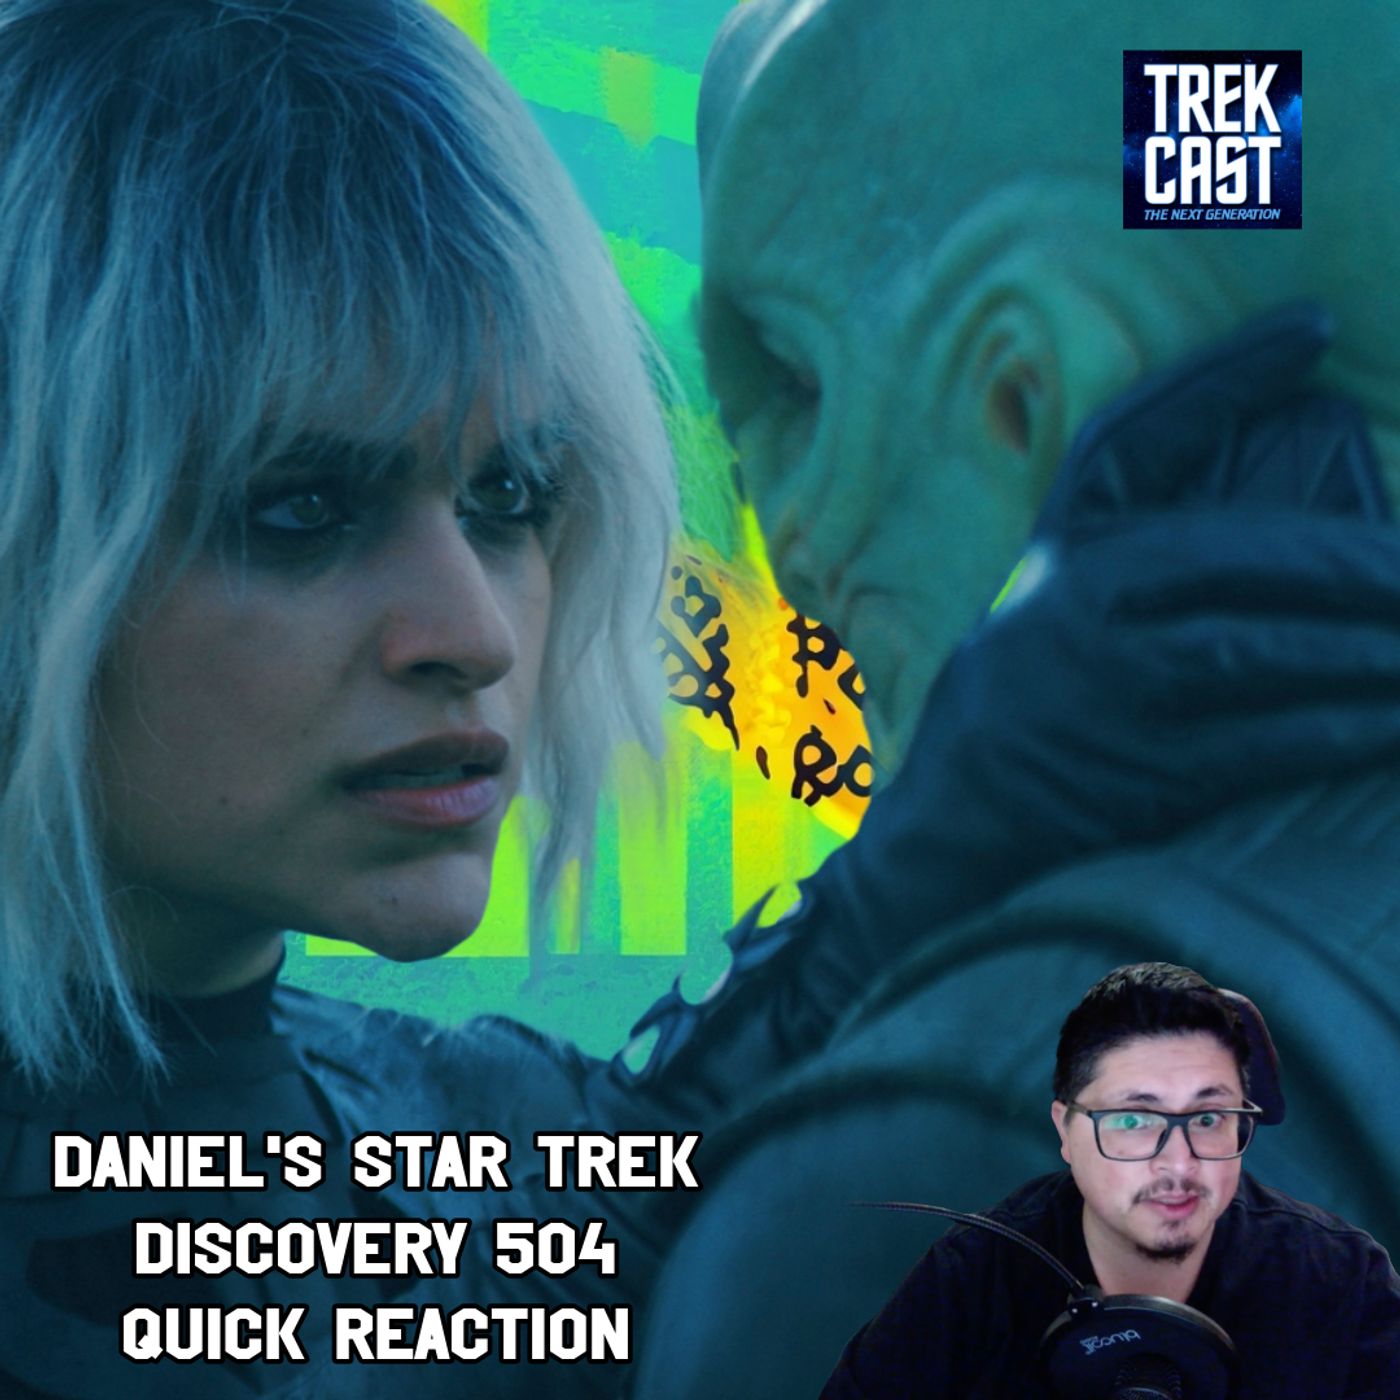 Daniel’s Star Trek Discovery 504 QUICK REACTION